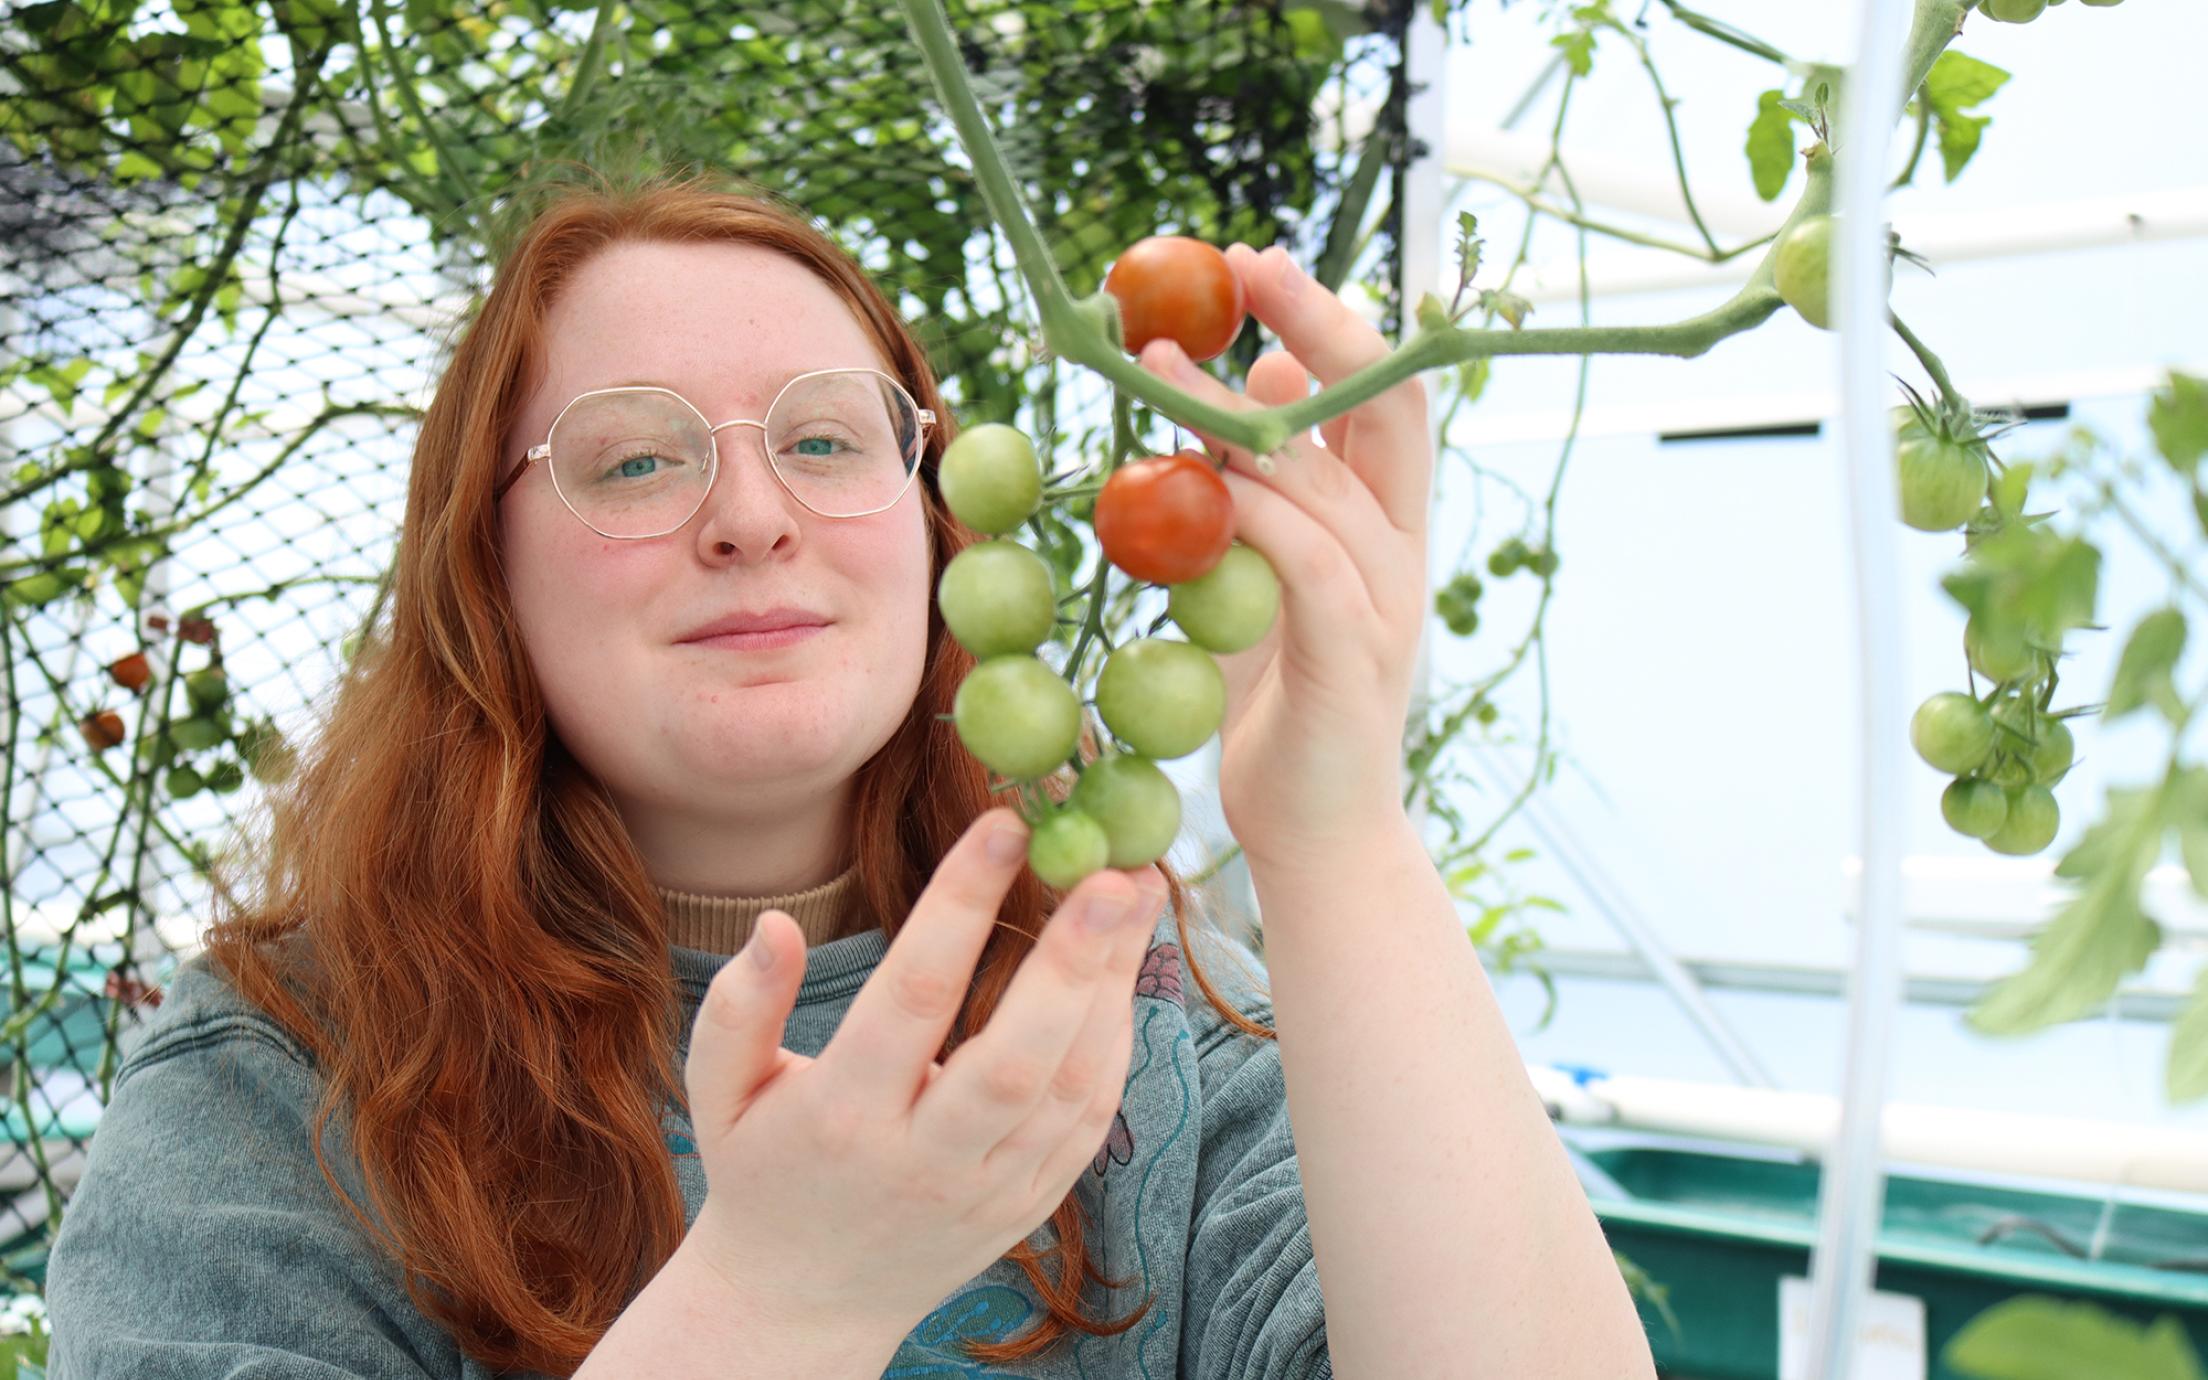 Nicole Darlington prunes leaves off a tomato plant.